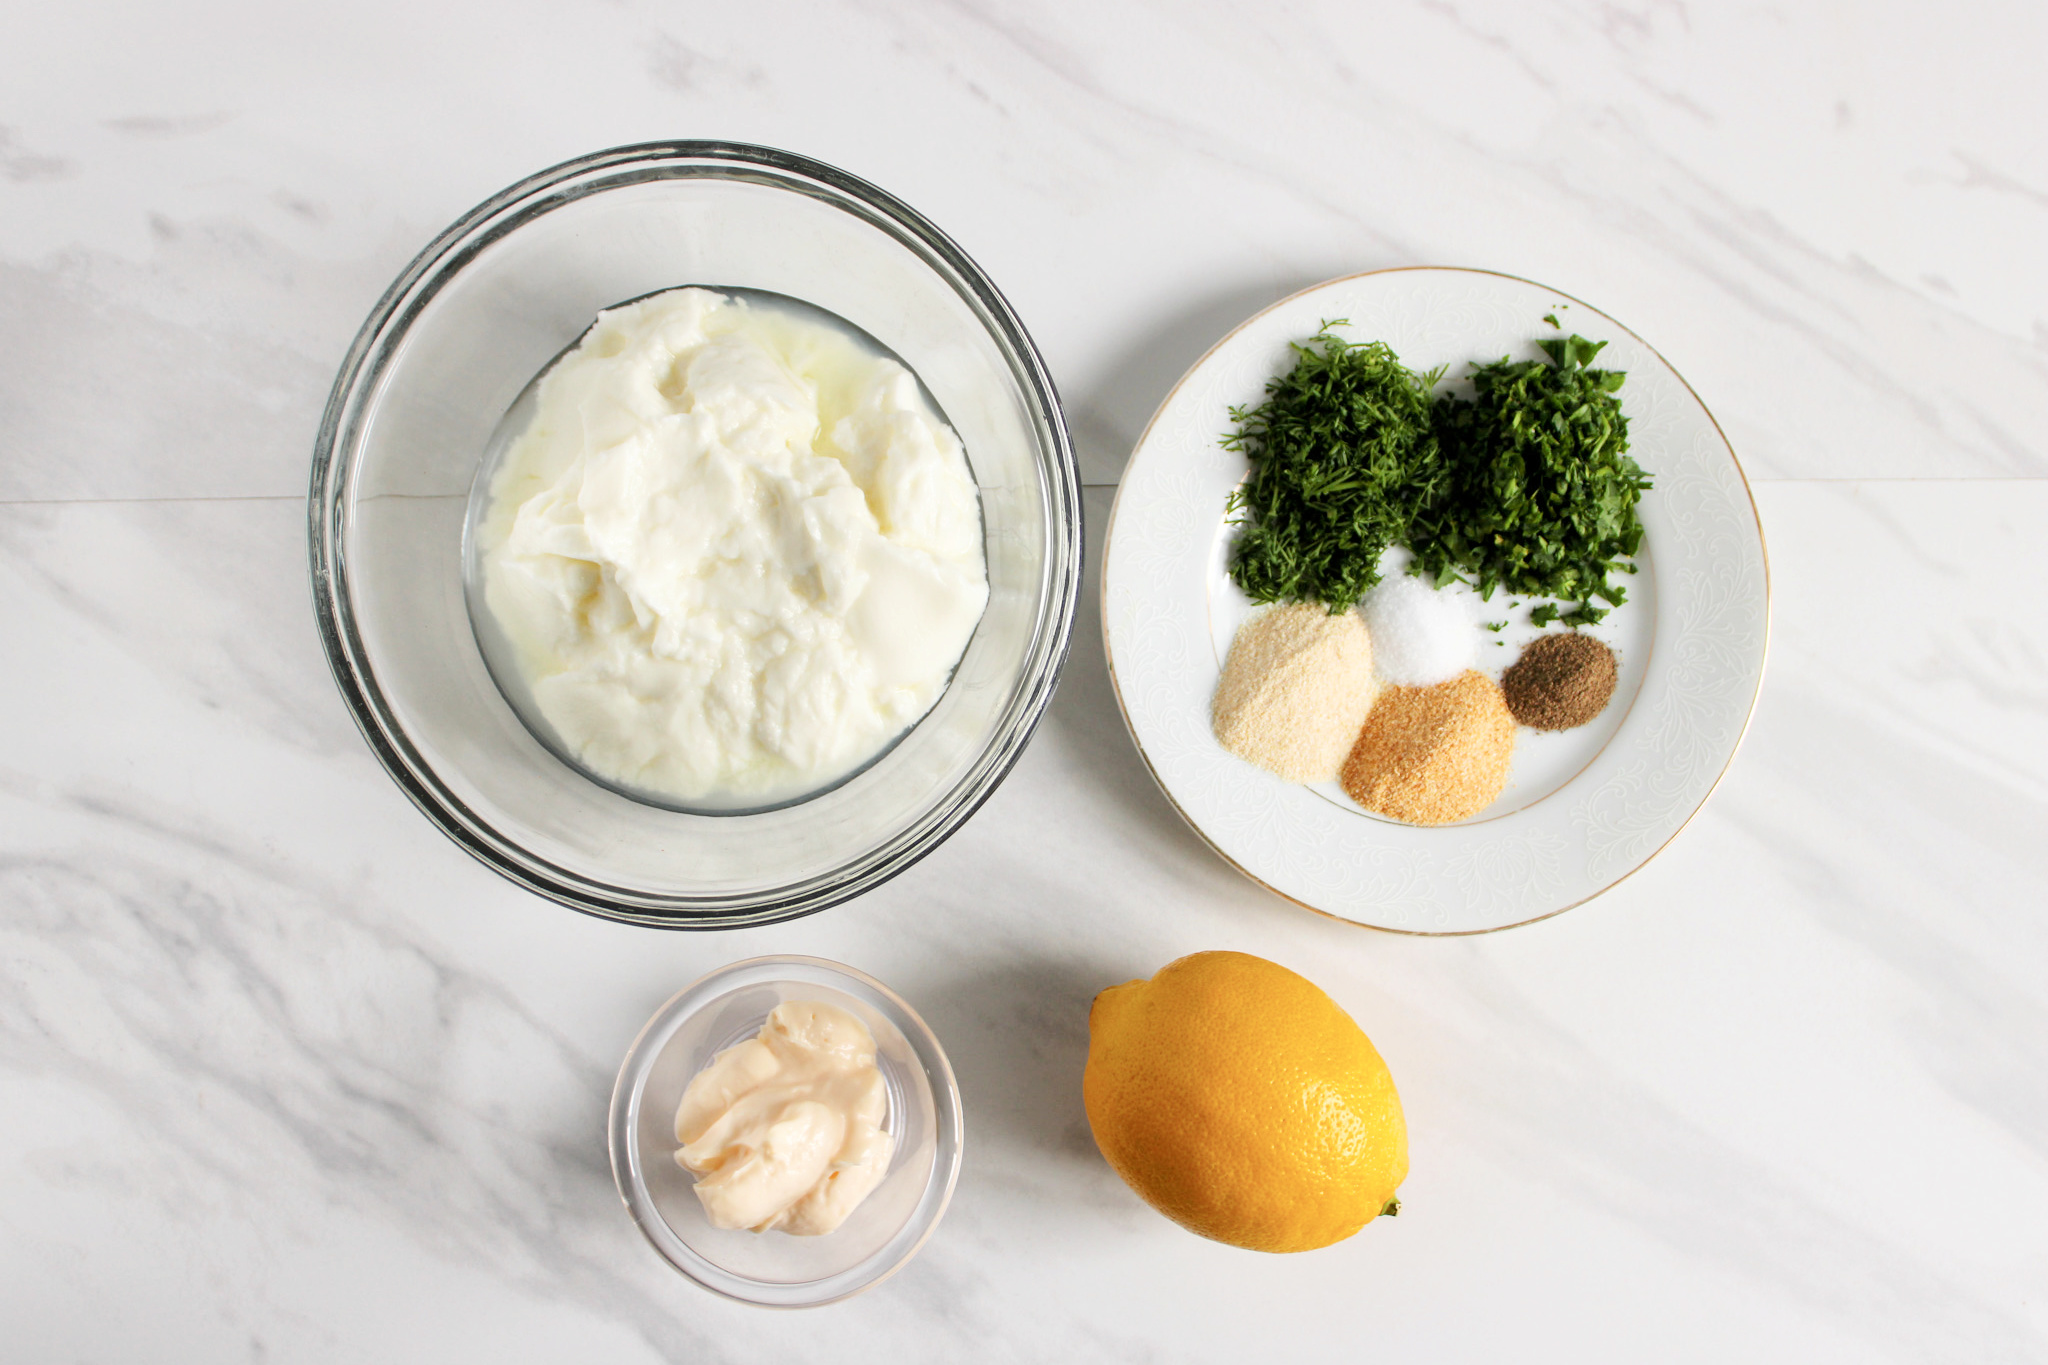 ingredients for yogurt dip recipe all in separate bowls.